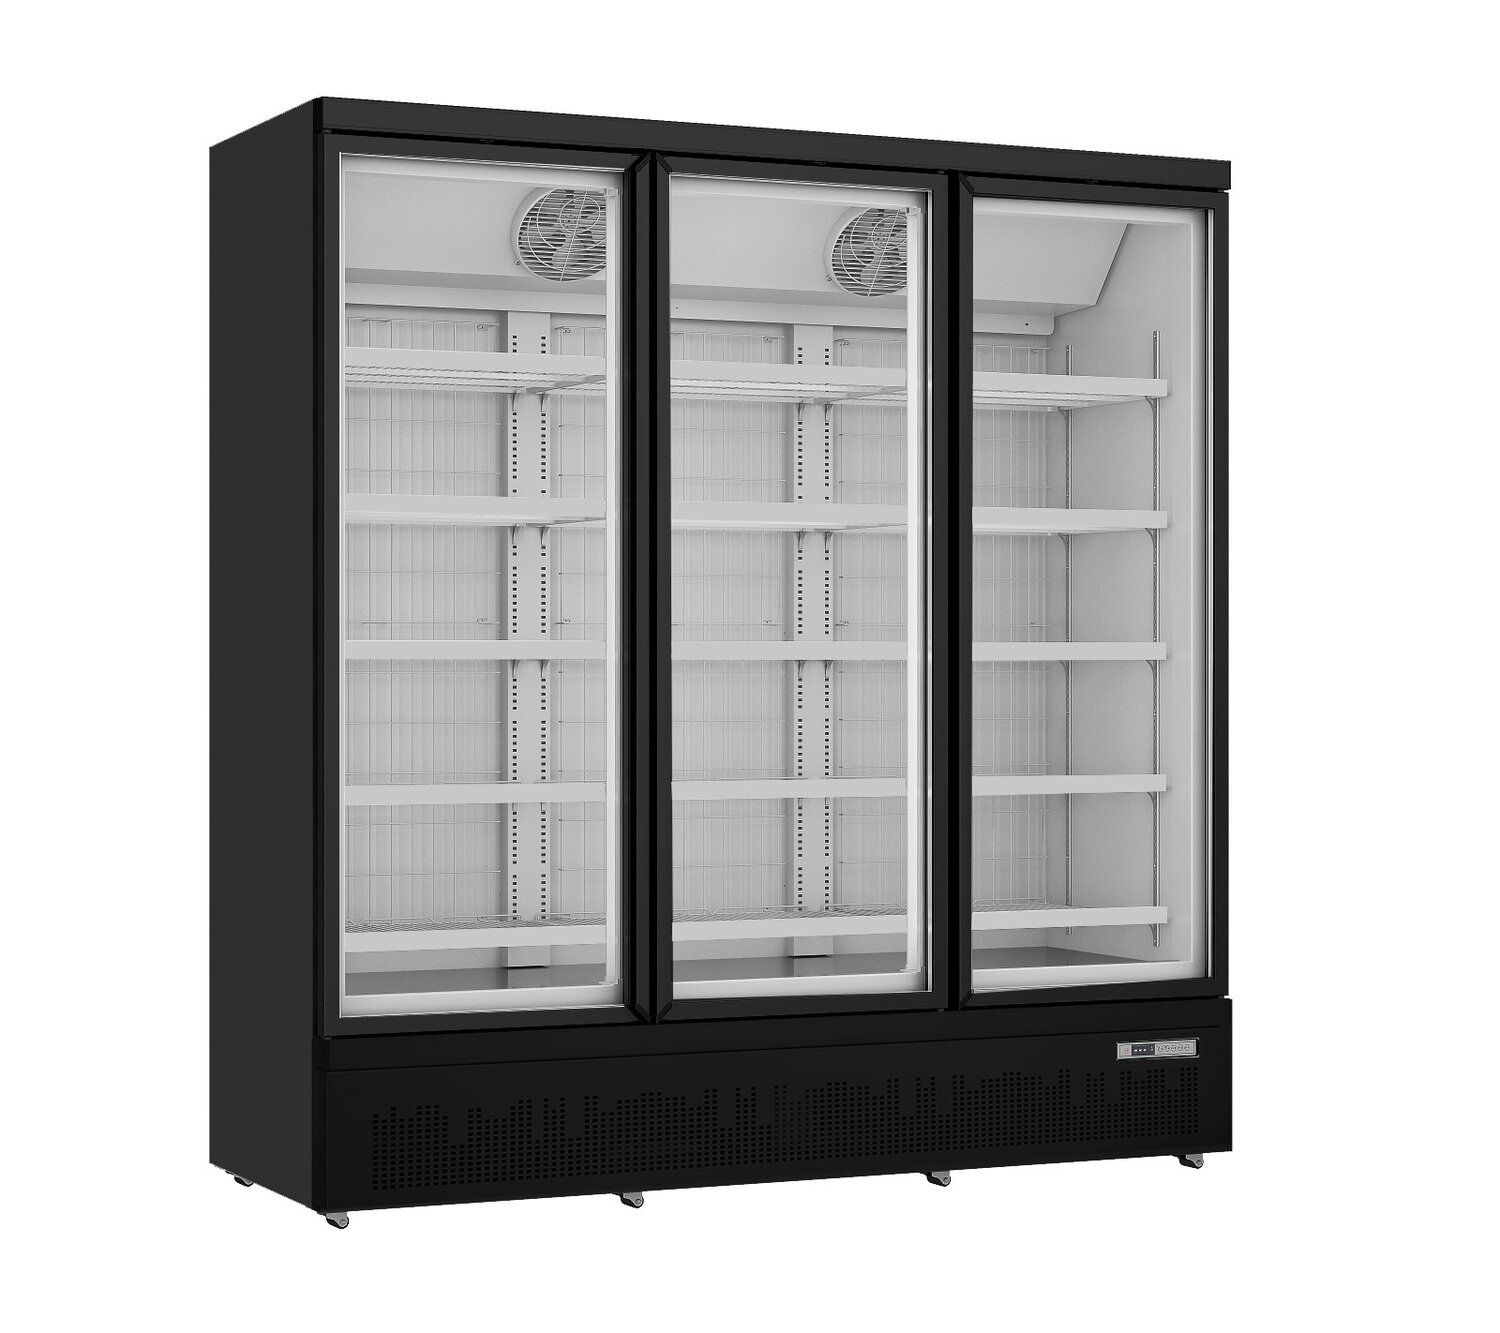 SARO Freezer with glass doors - model GTK 1480 PRO